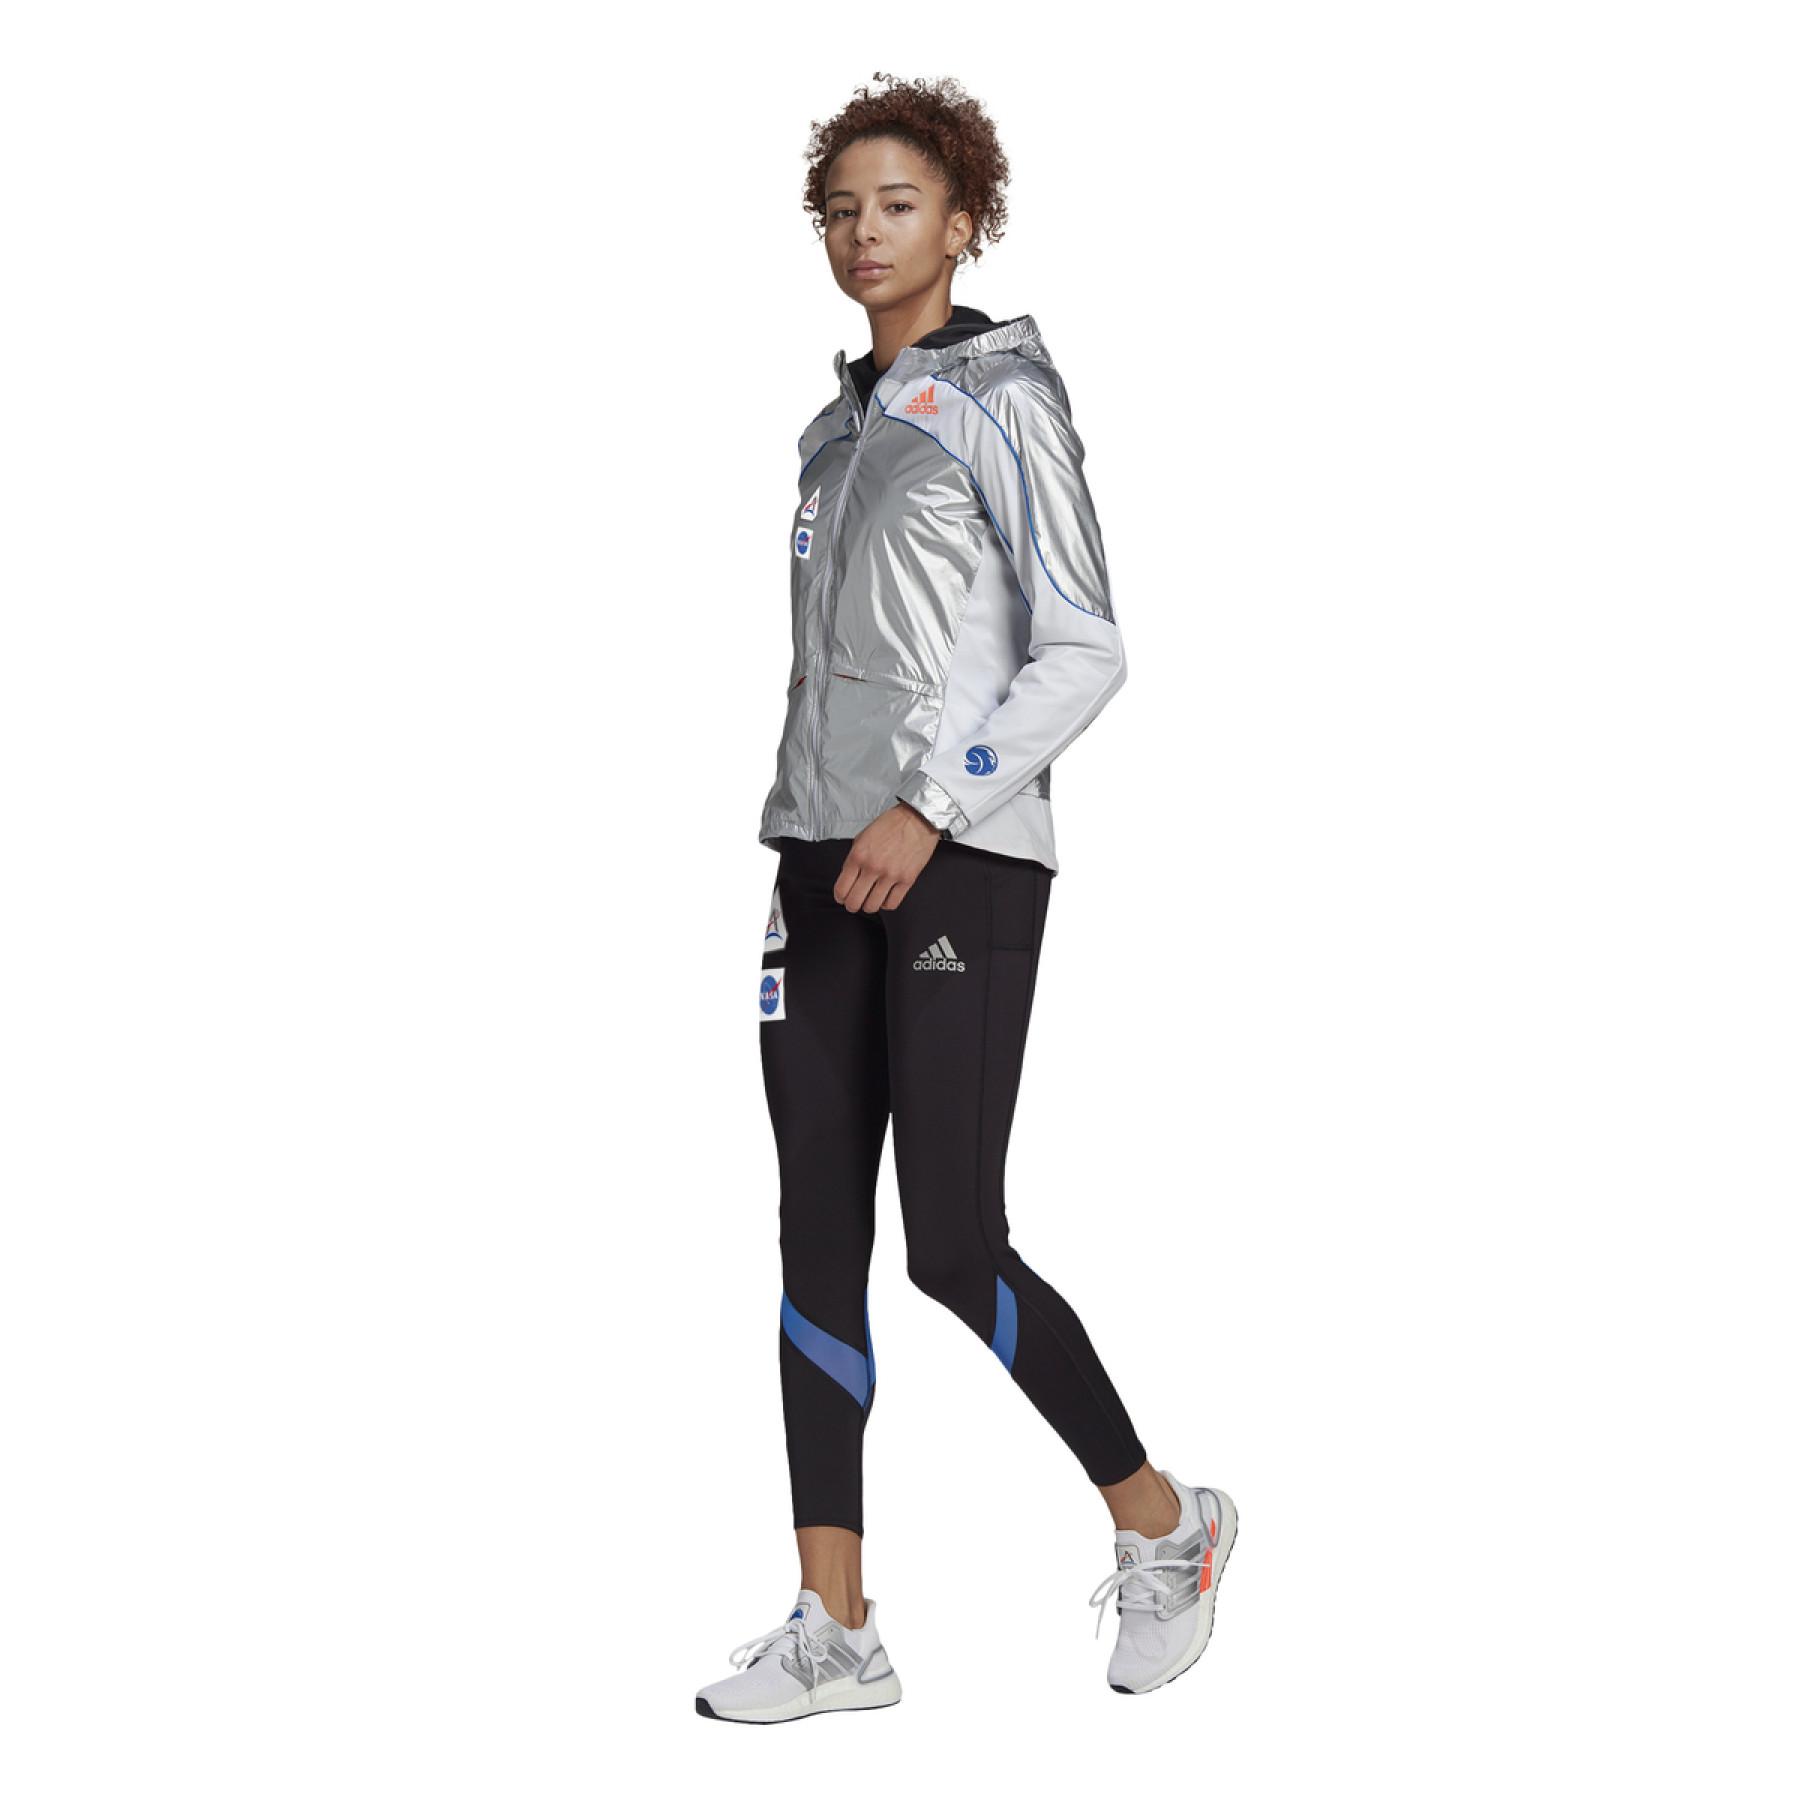 Veste femme adidas Marathon Space Race